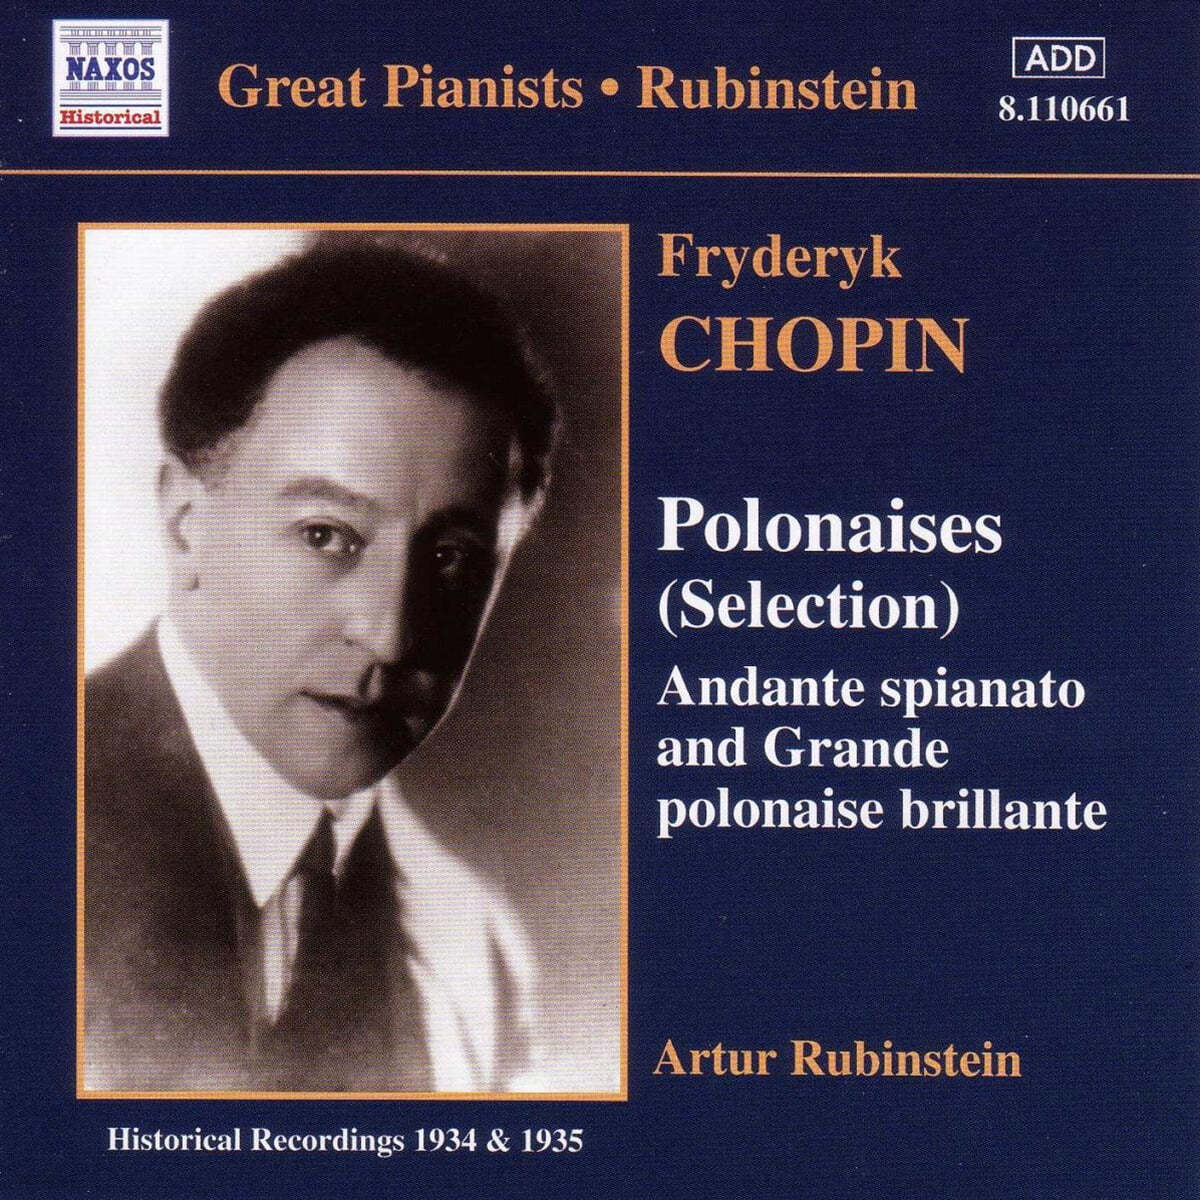 Artur Rubinstein 쇼팽: 폴로네이즈 (Chopin : Polonaises)